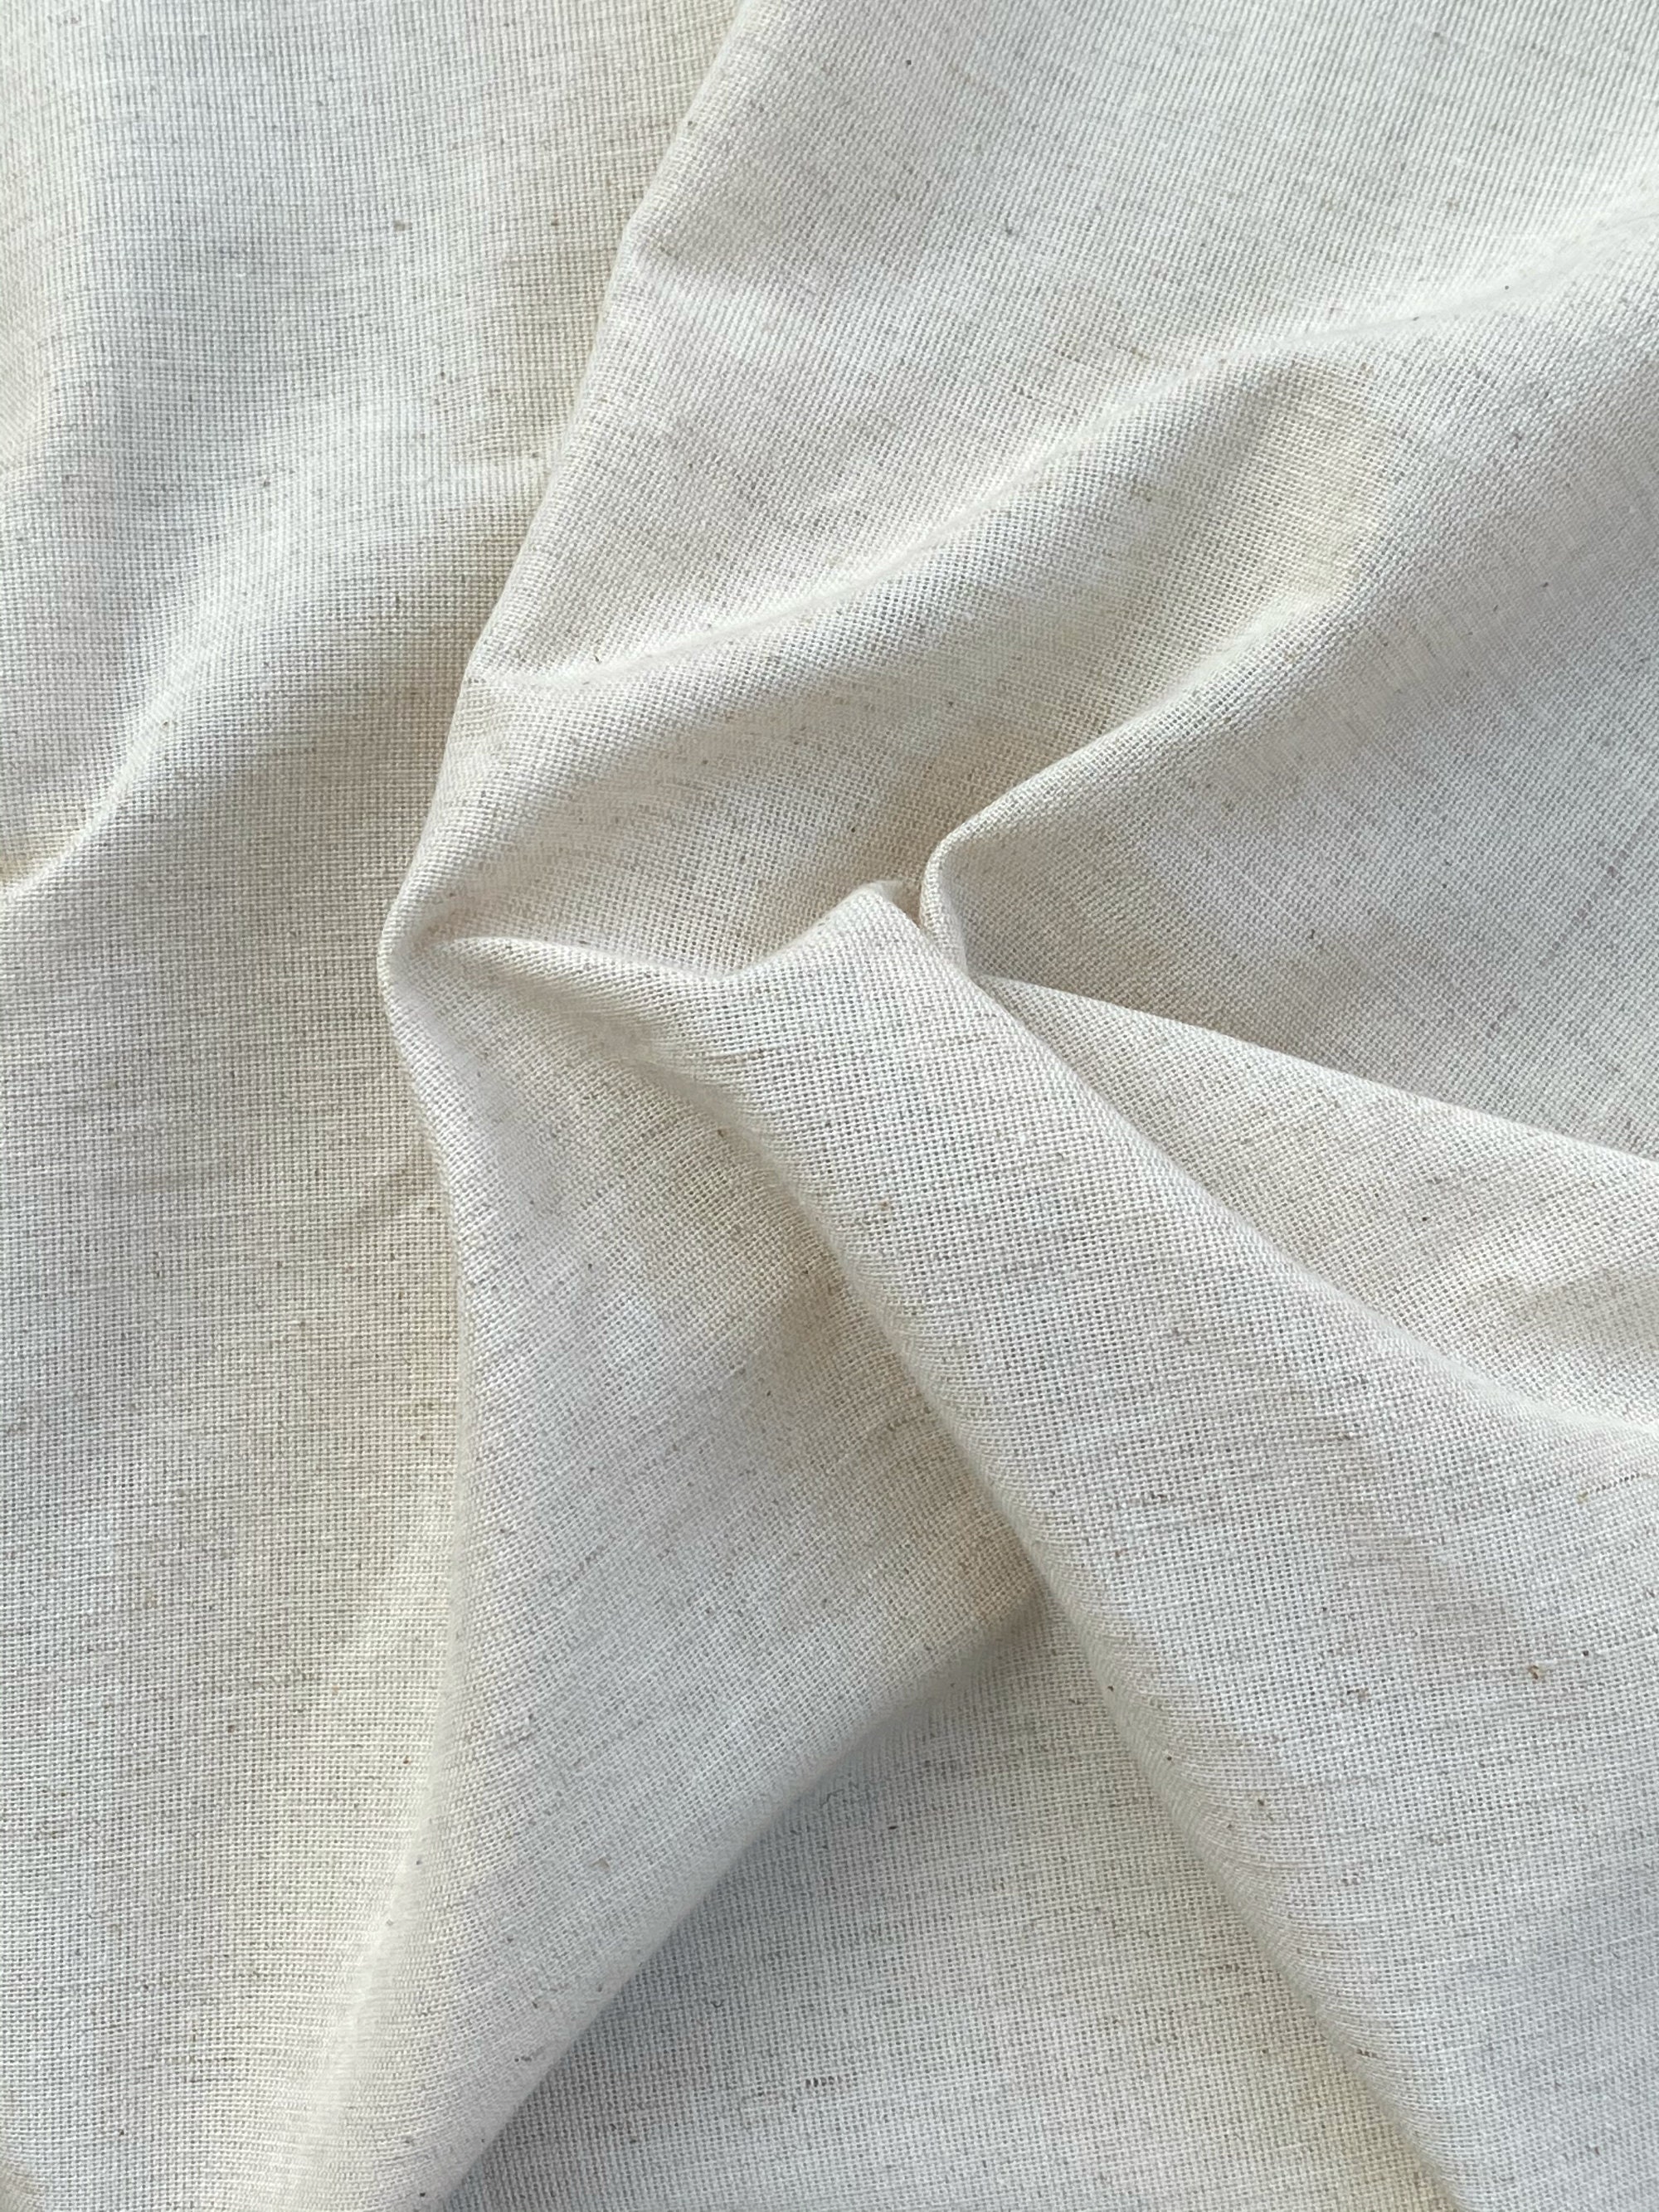 Cotton Linen Blend Natural Fabric by Half Yard 0.5 Yard - Etsy Australia